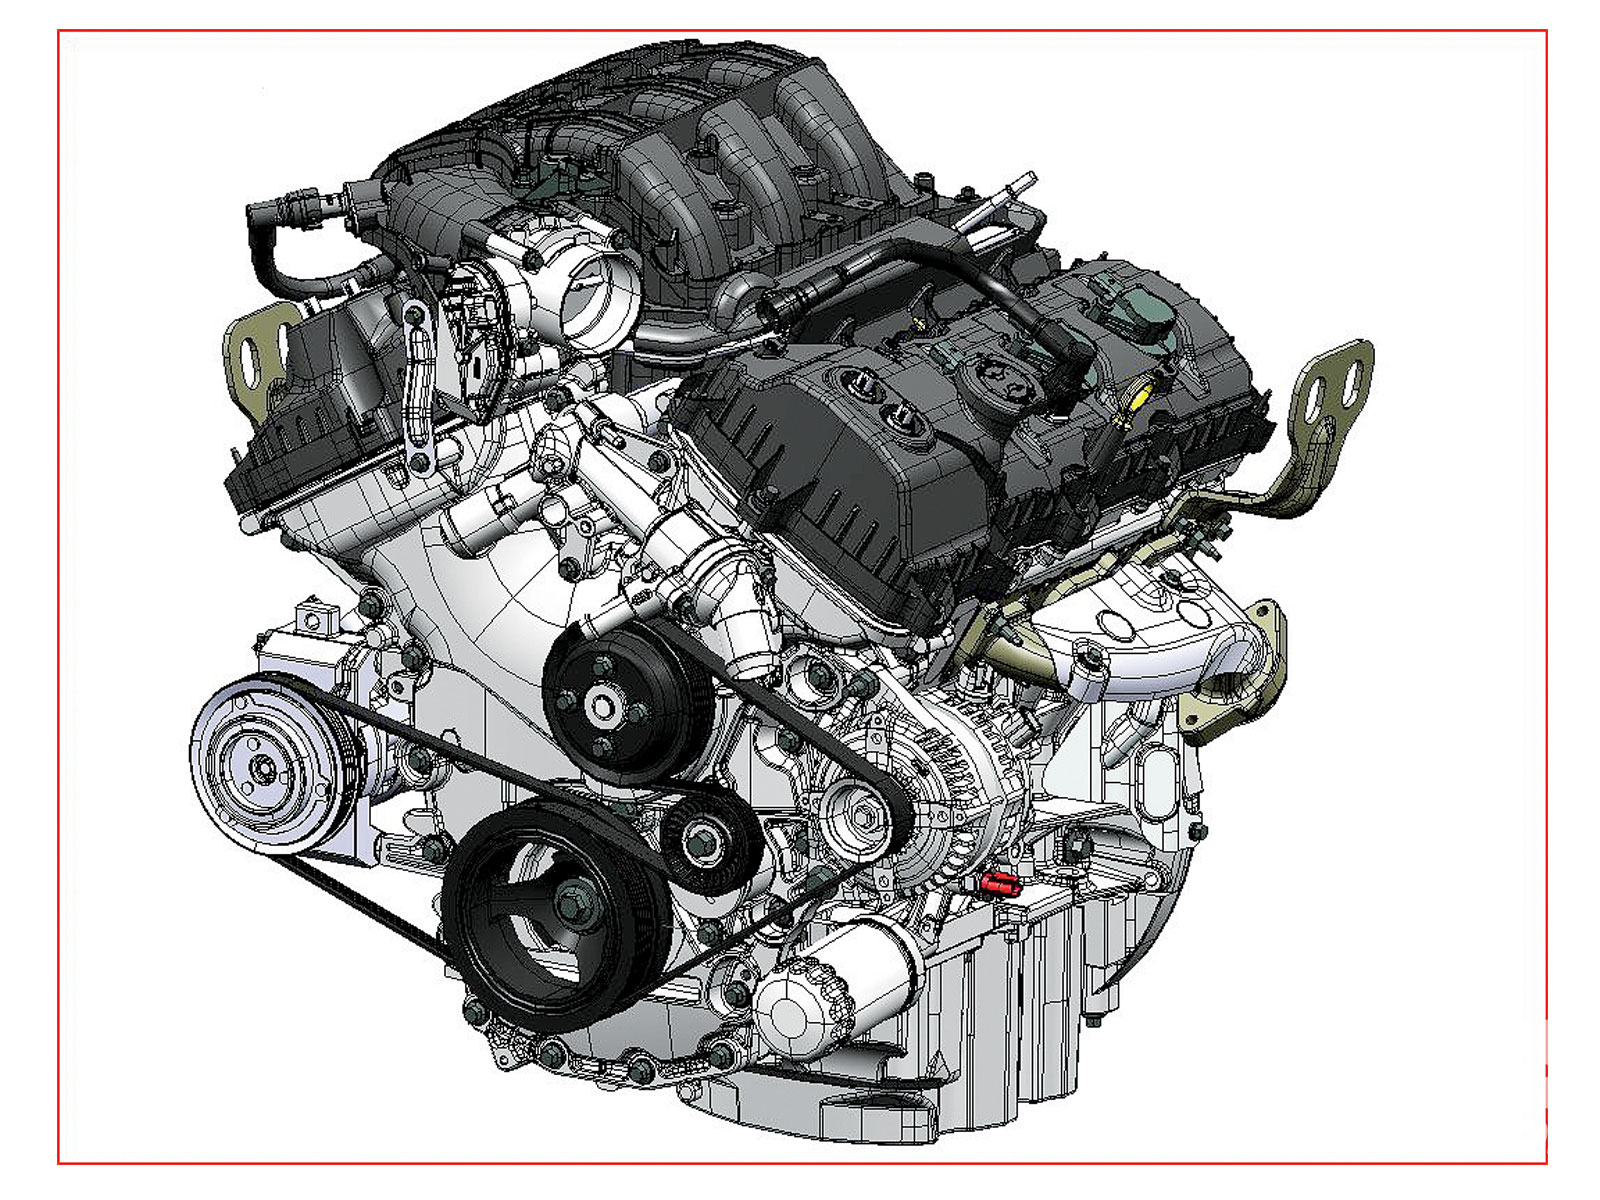 2015-17 Mustang Engine Specs: 3.7L V6 - Lmr